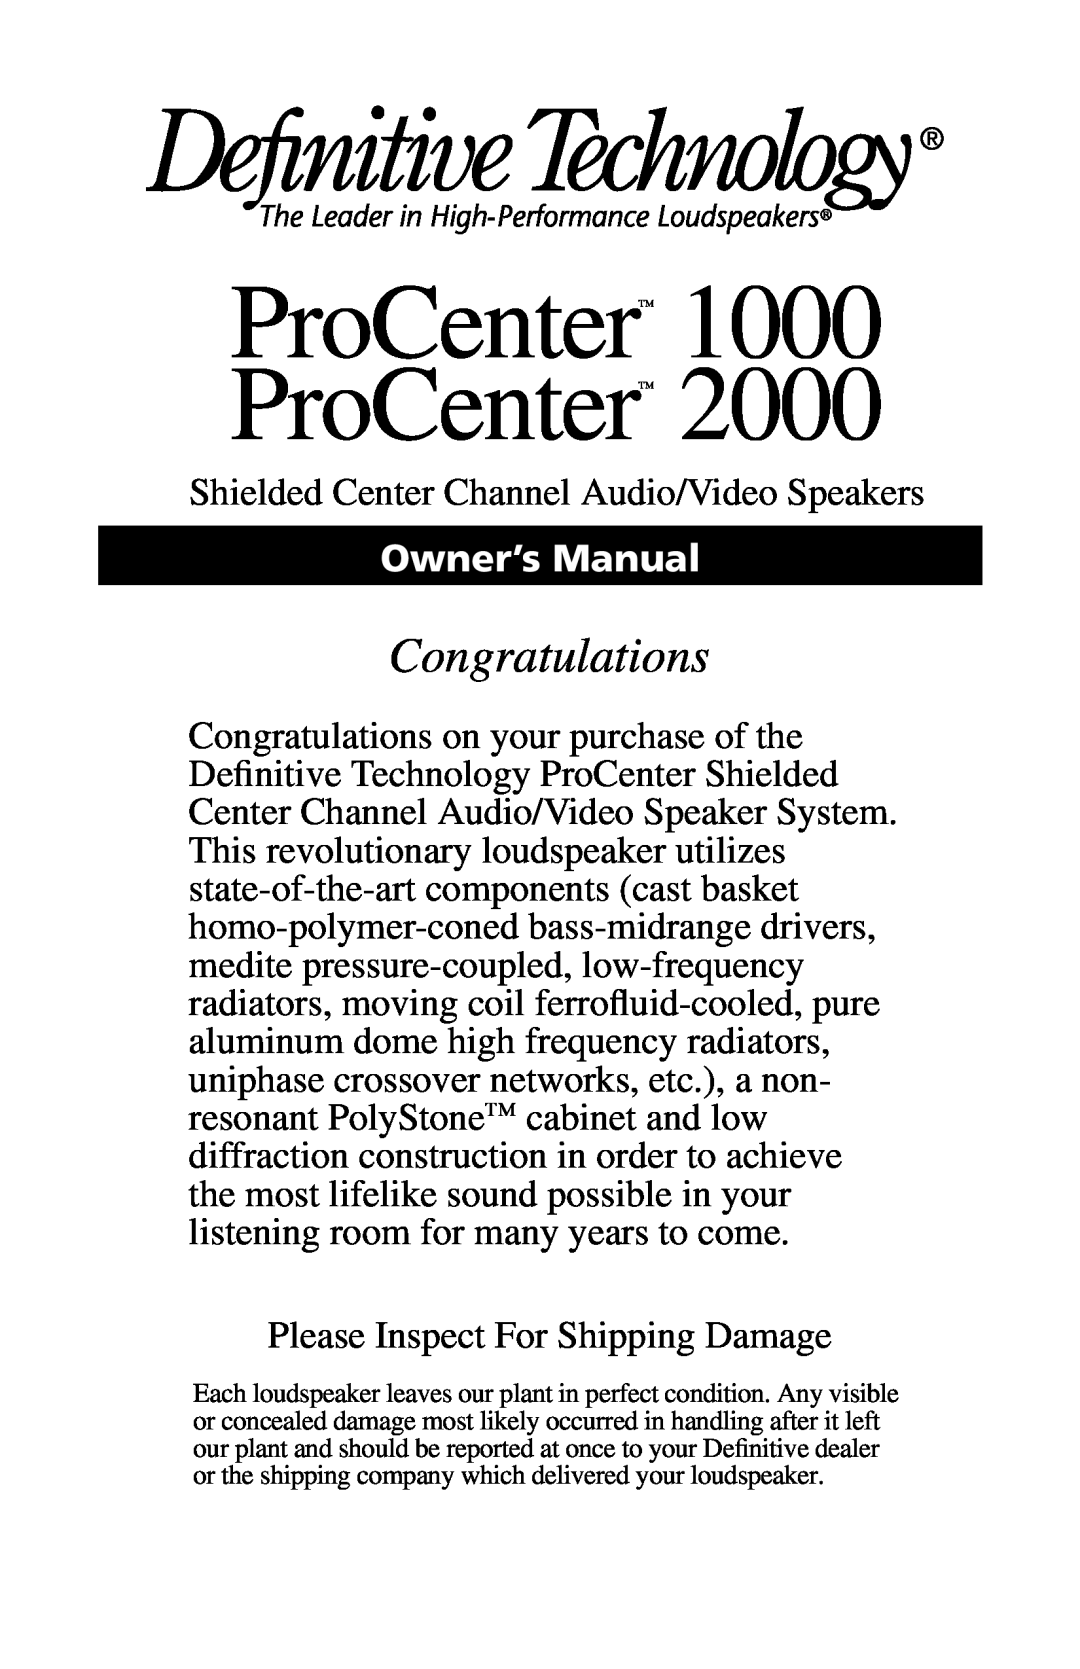 Definitive Technology 2000 owner manual SuperCube, Guide d’utilisation 